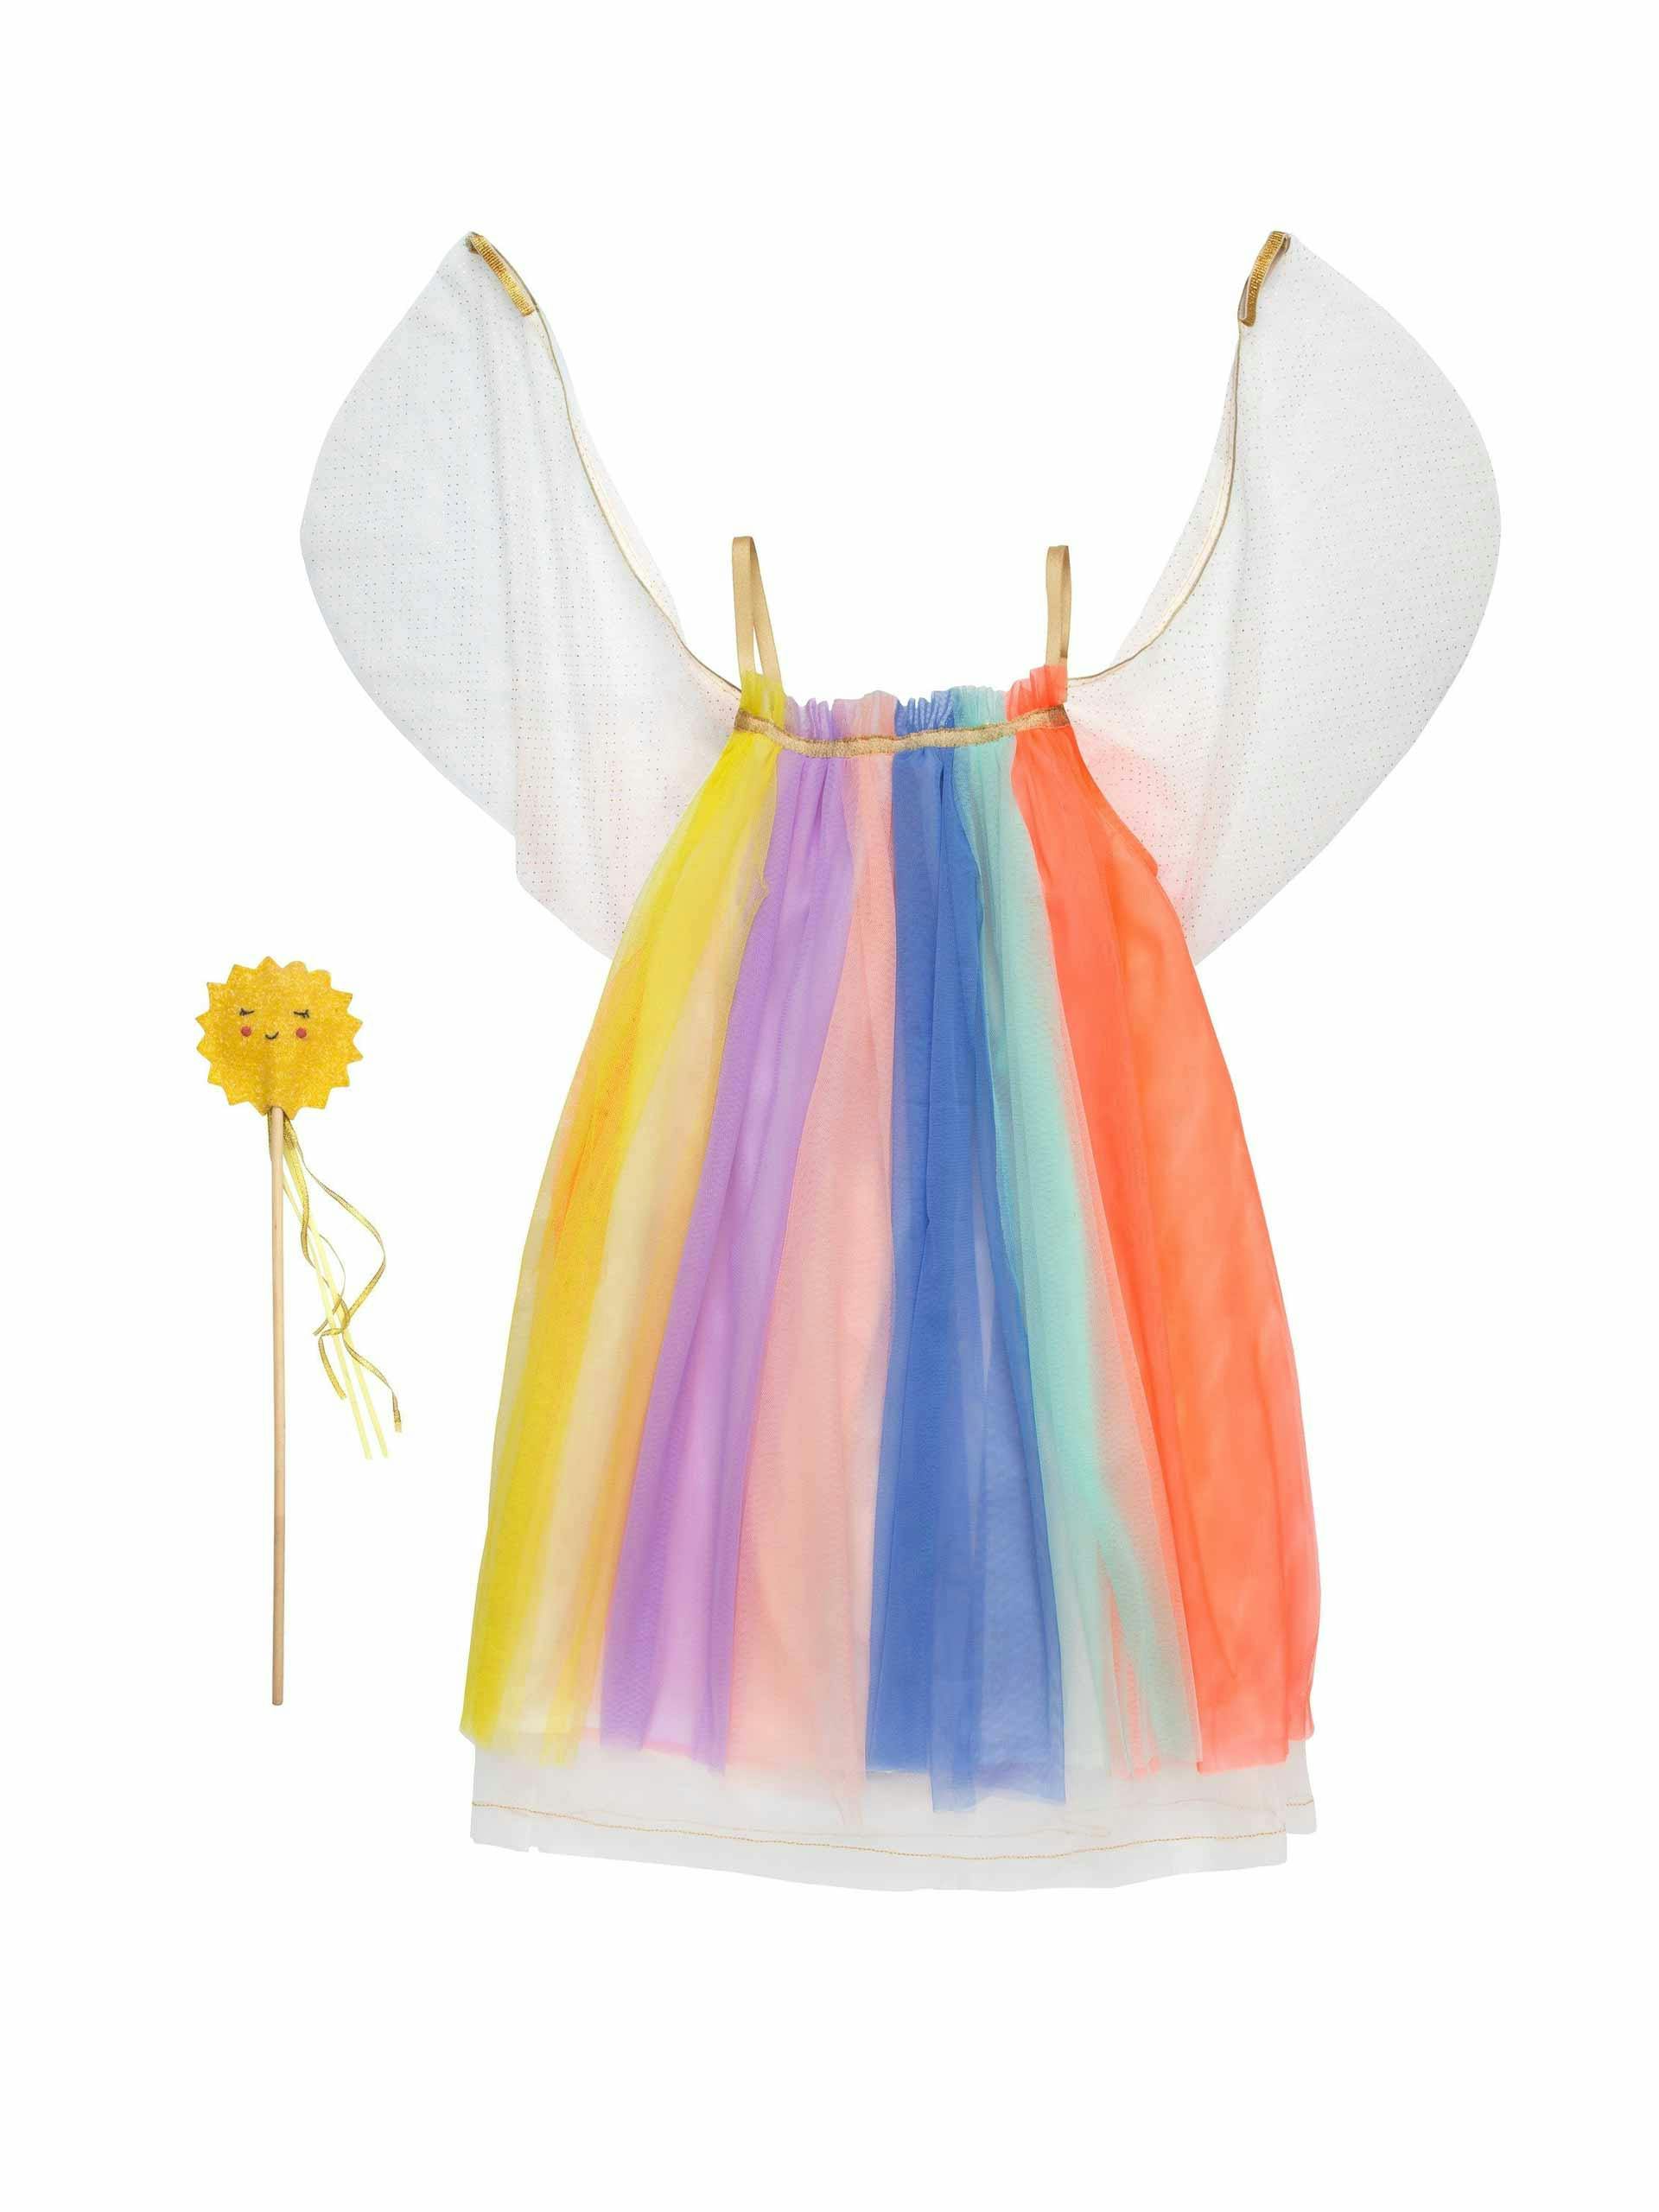 Rainbow girl costume